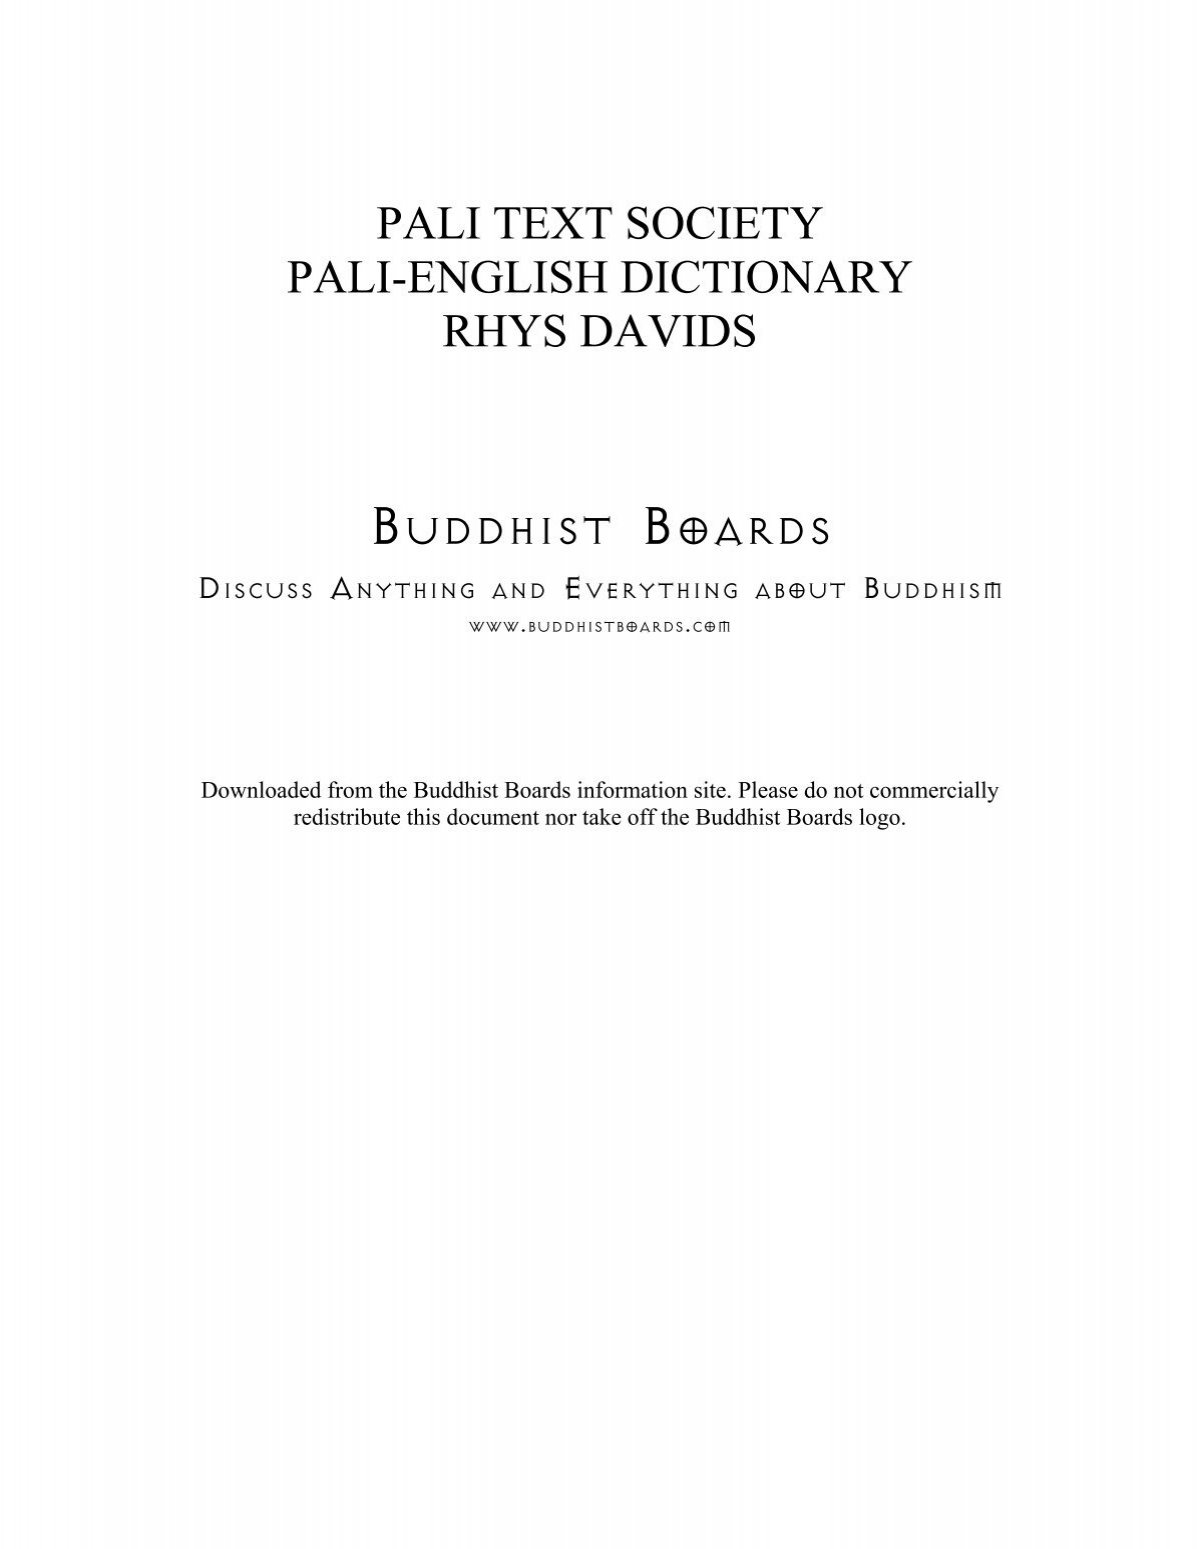 Pali Society Pali-English Dictionary by Rhys